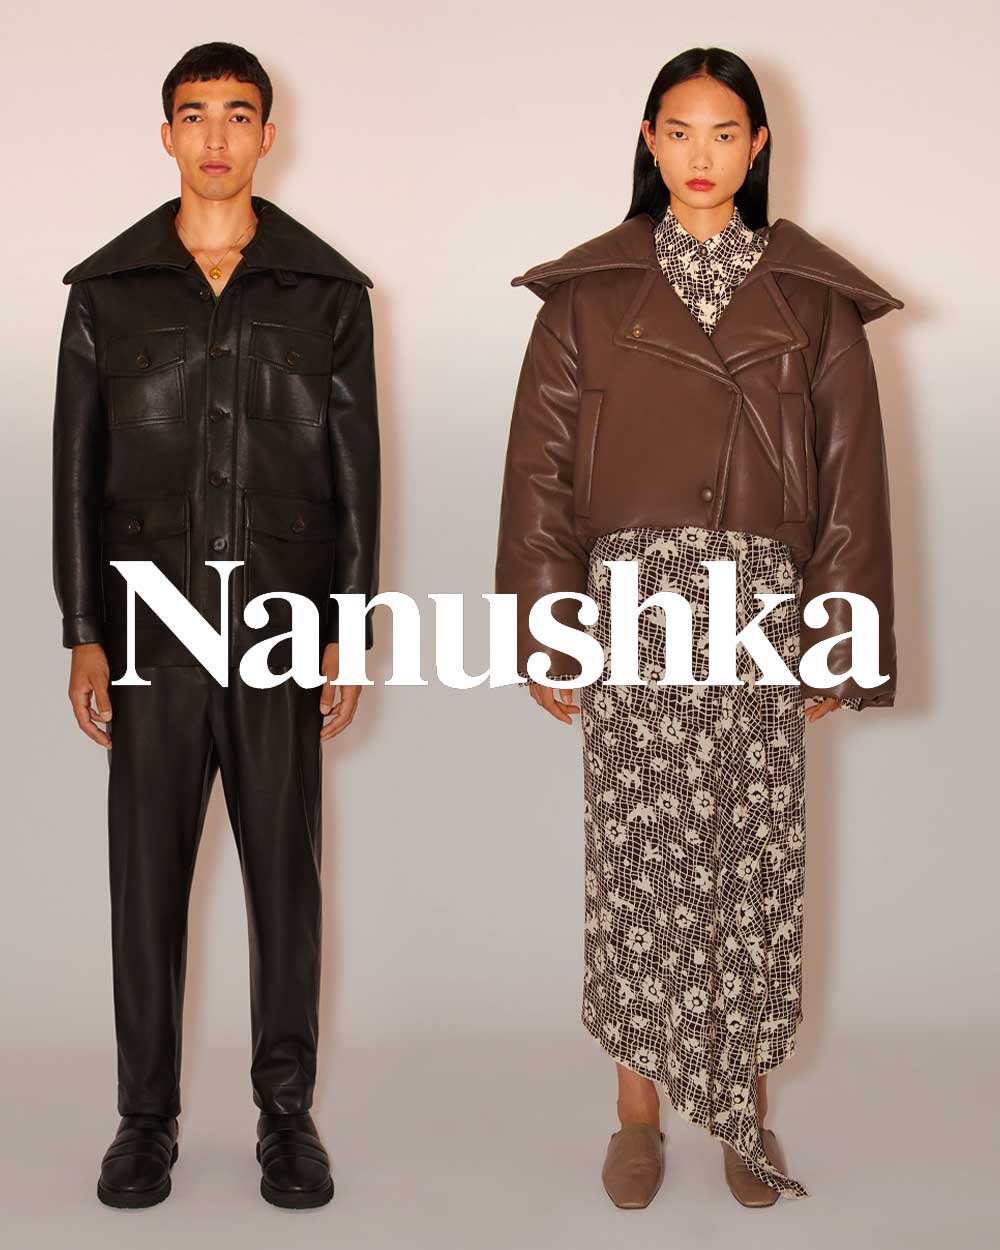 Nanushka vegan leather clothing